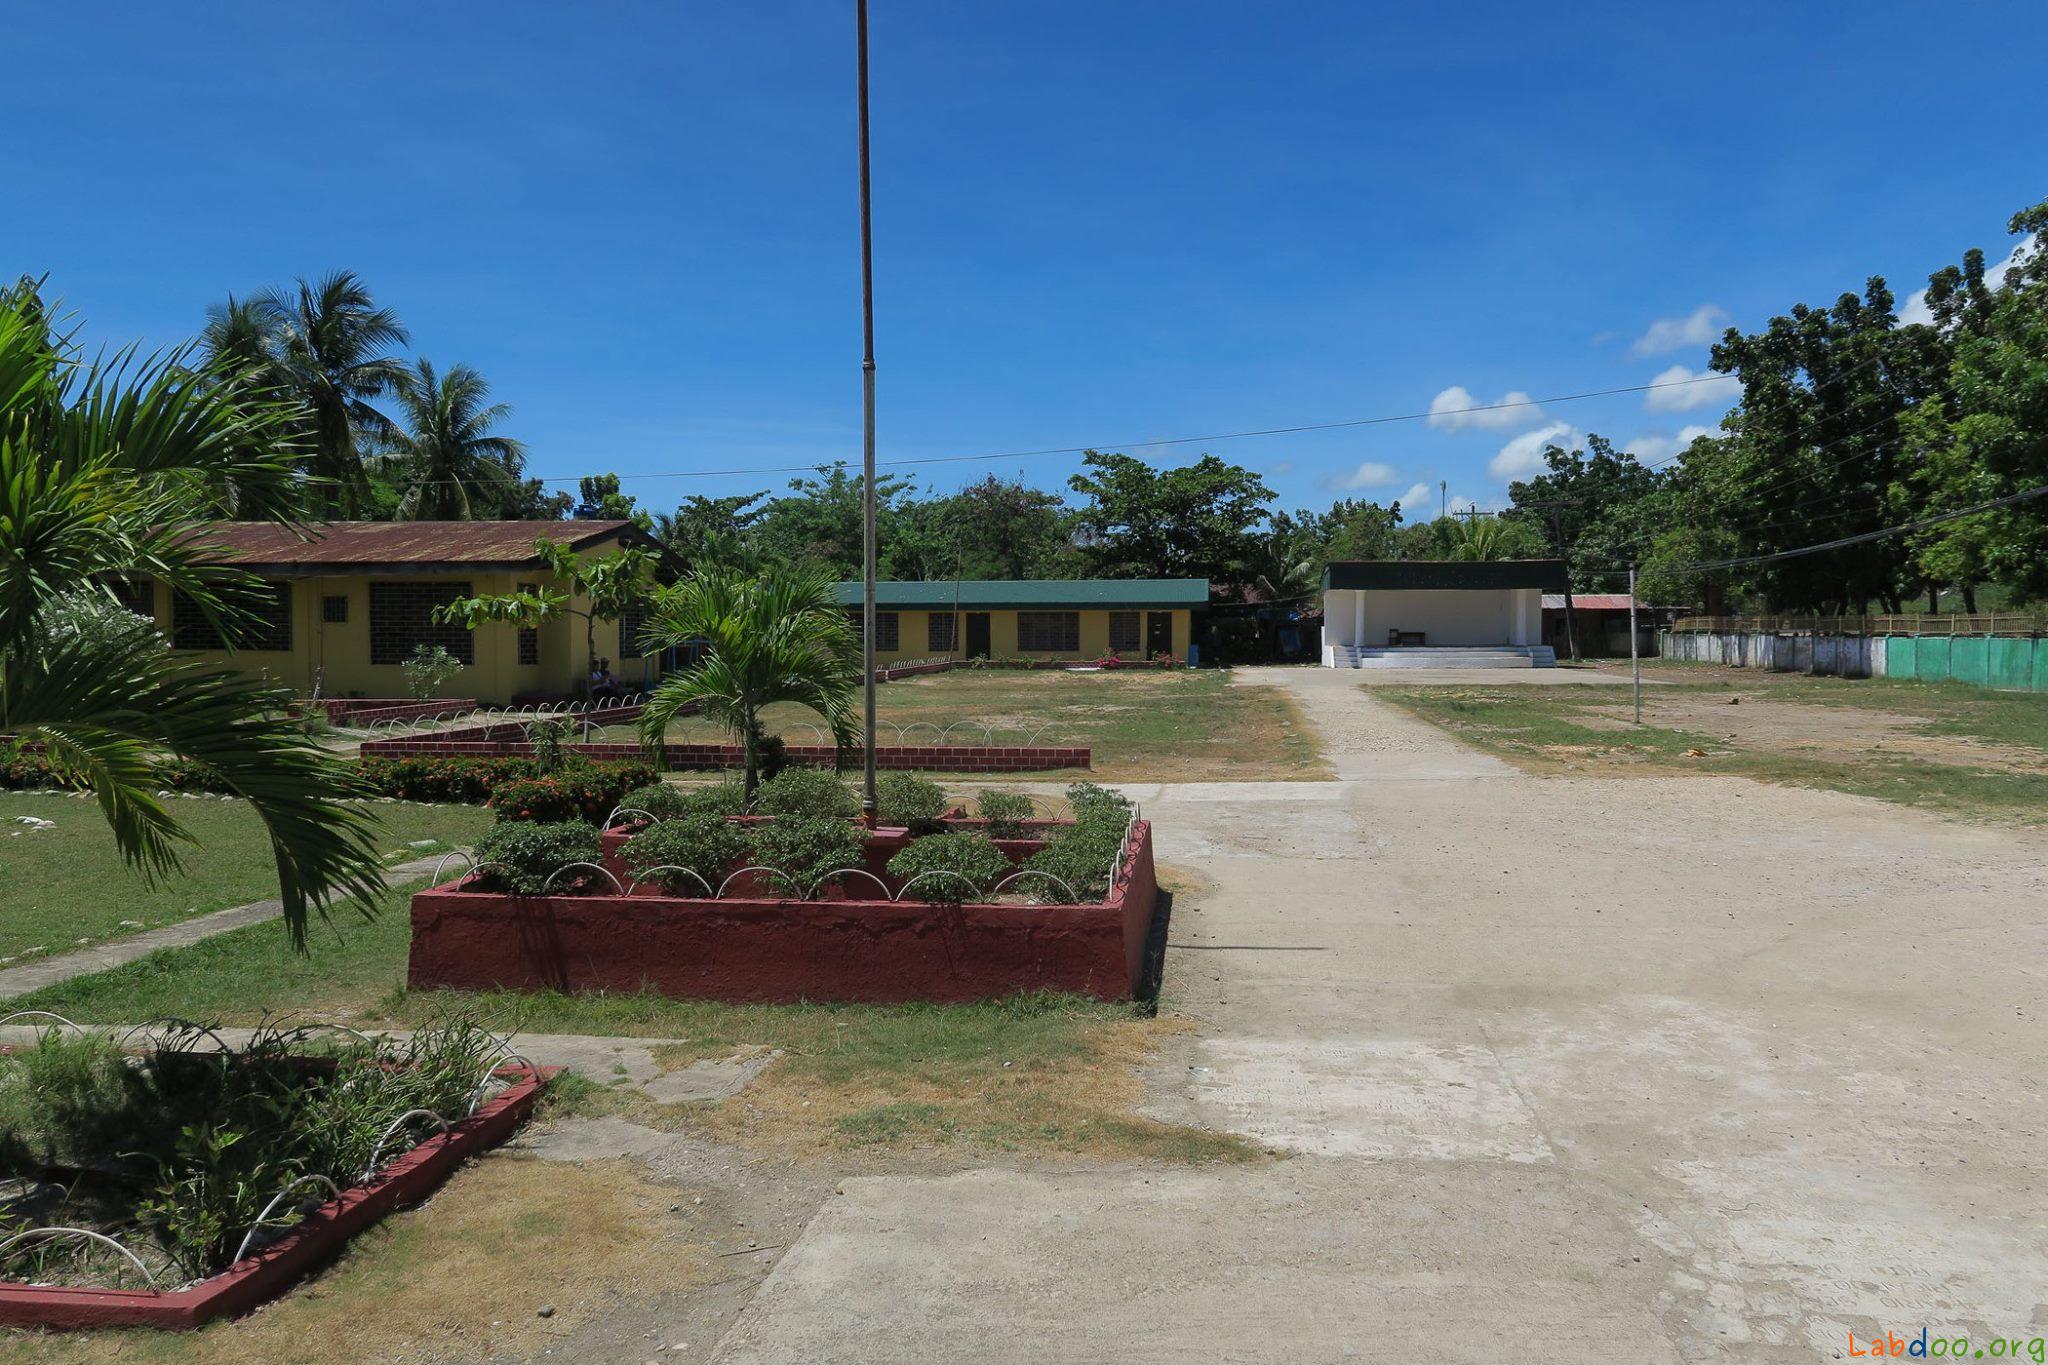 Philippines, Luyang, Carmen: Luyang Elementary School - Photo Album ...